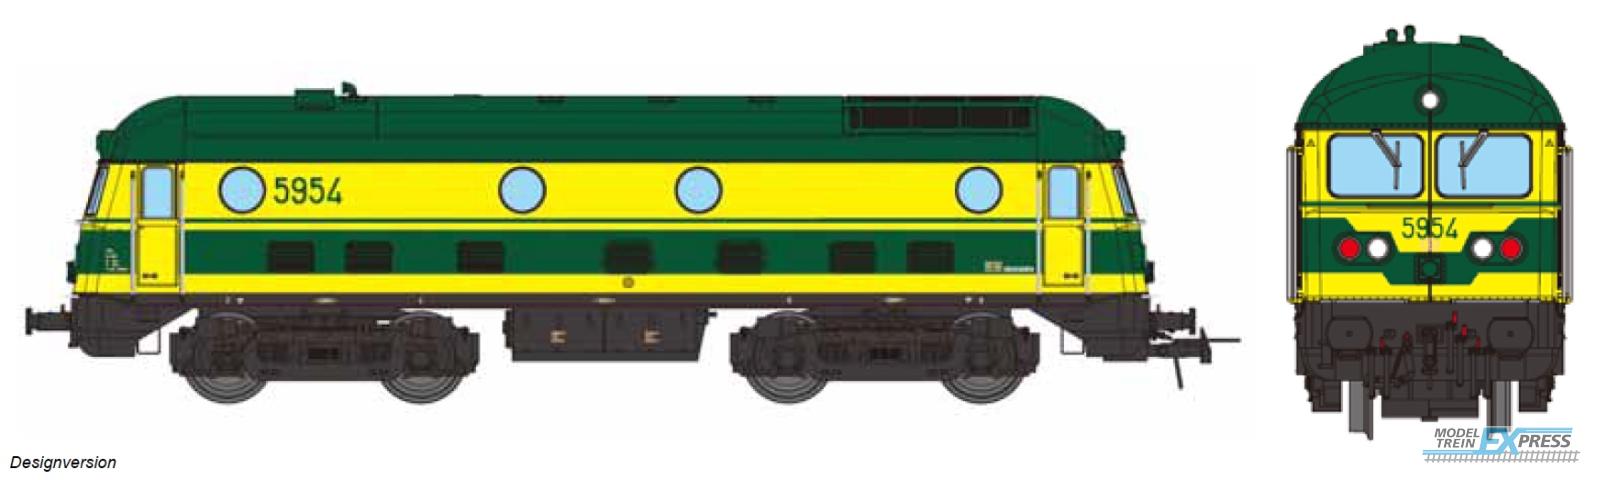 B-Models 9311.02 Diesel 5954, DC. 2-Rail Digital